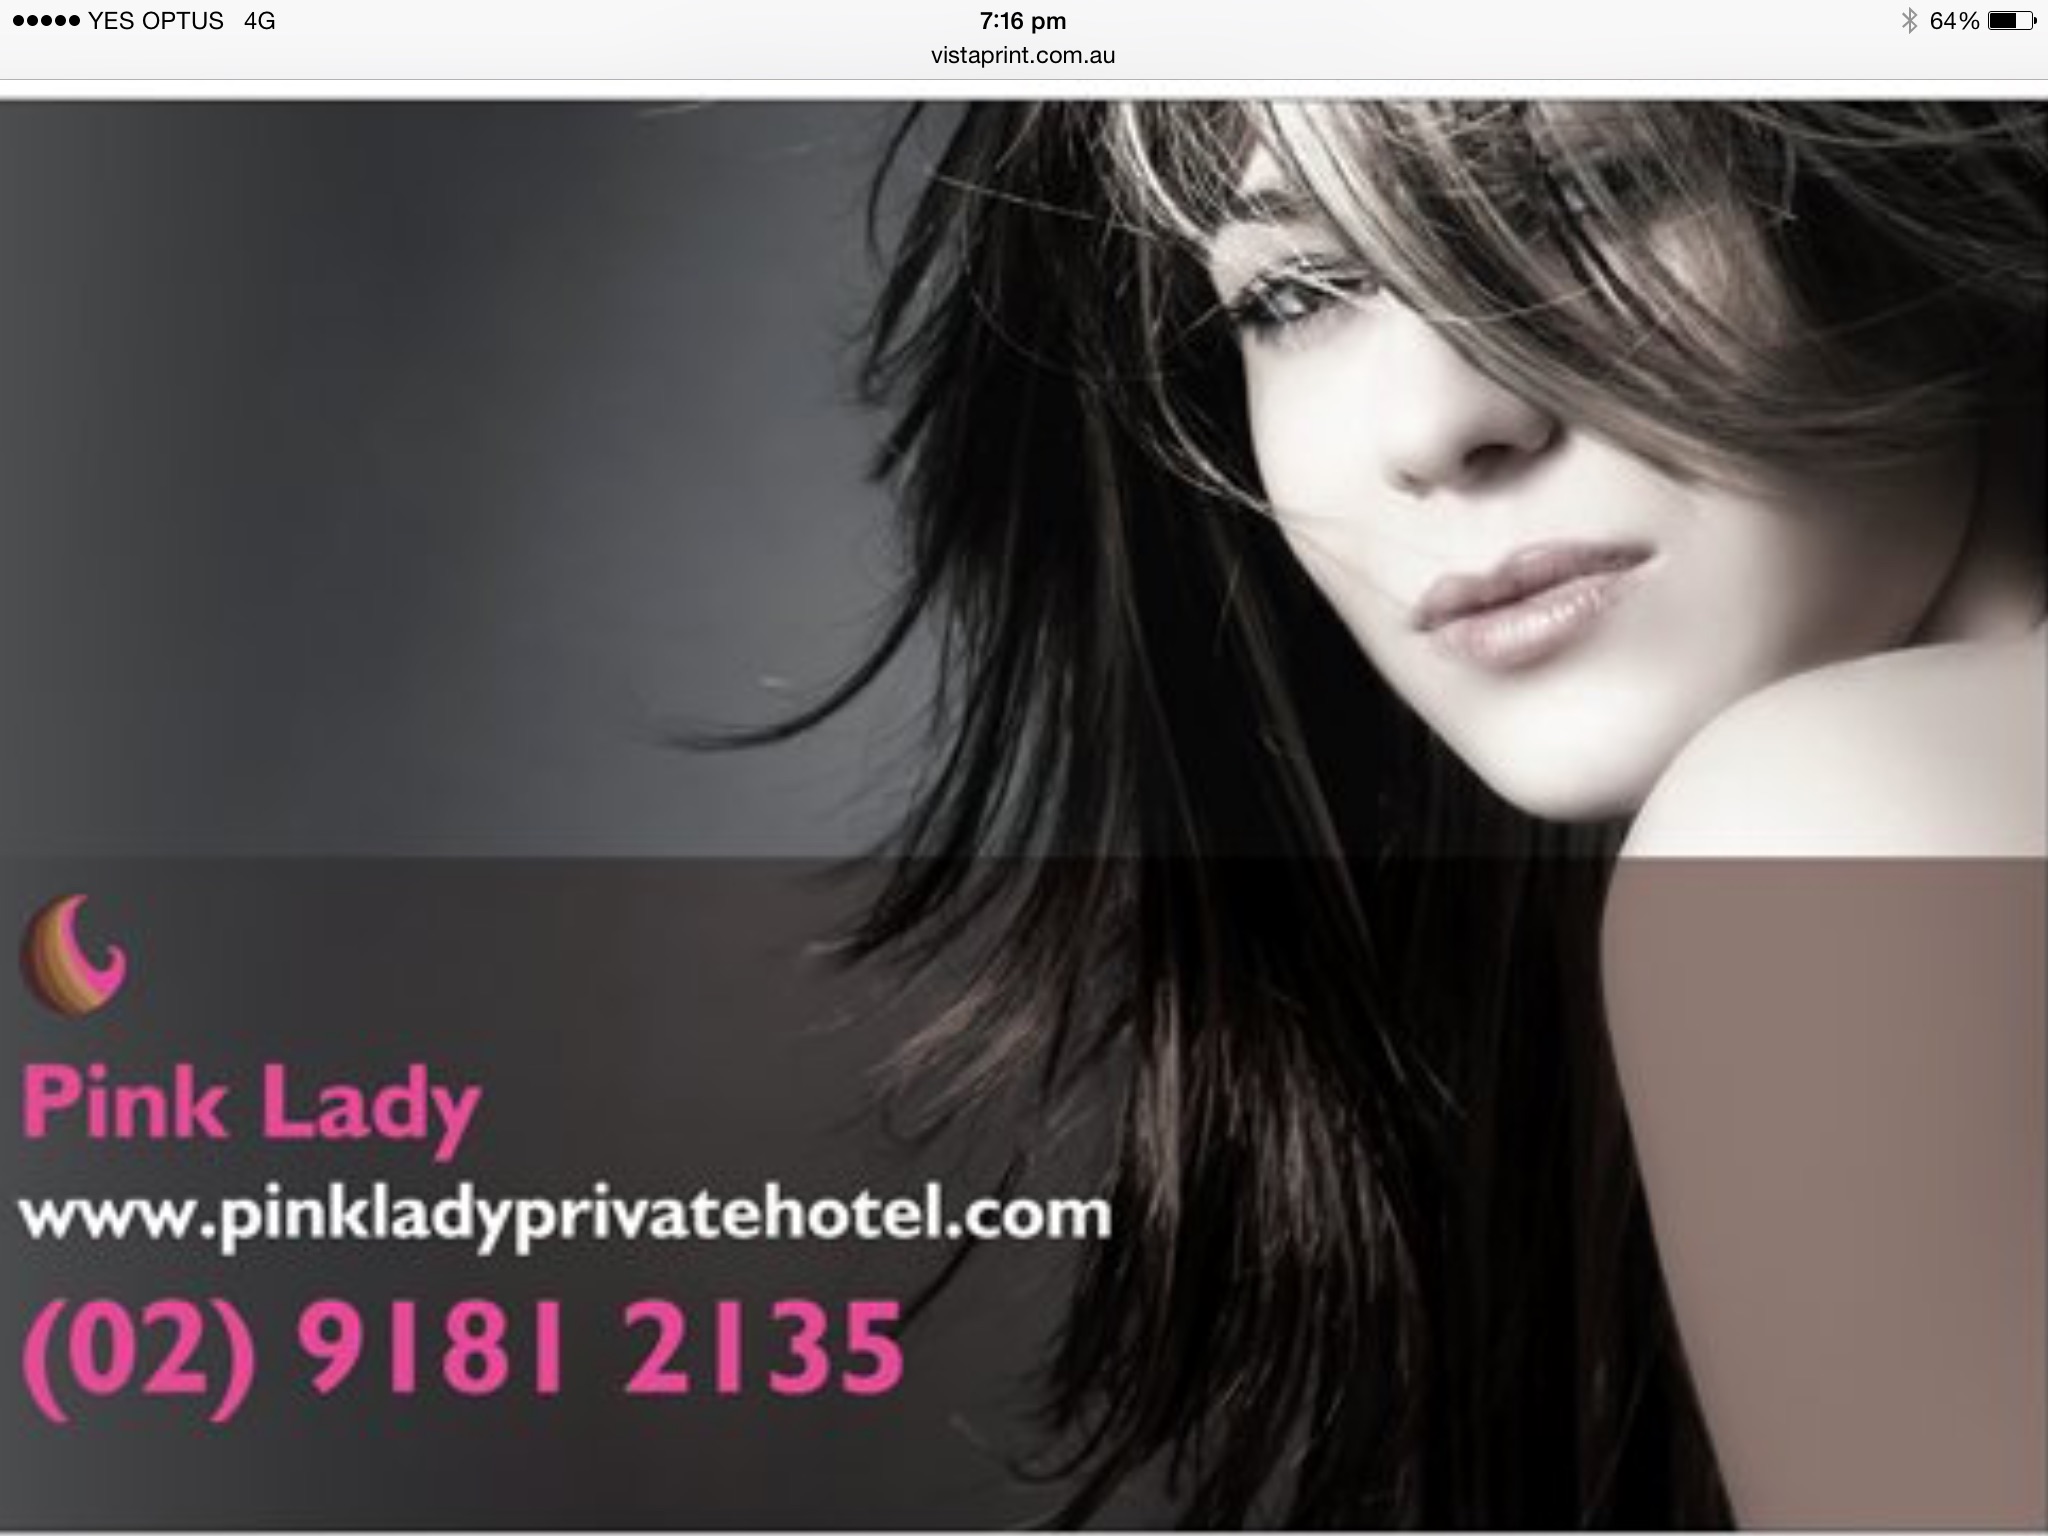 Pink Lady Private Hotel - Wagga Wagga Accommodation